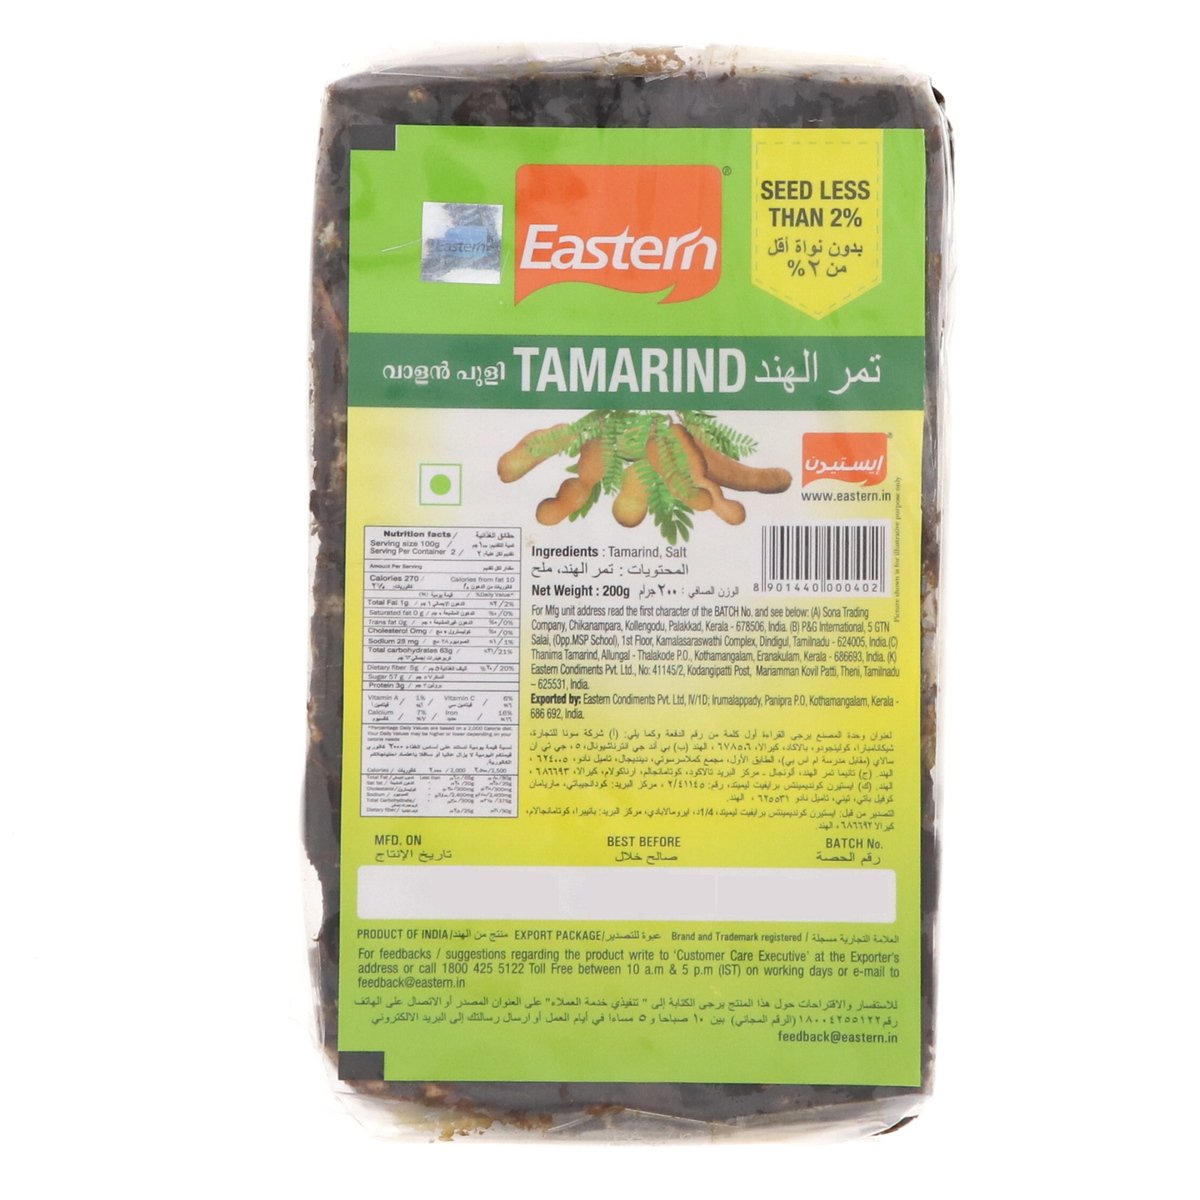 Eastern Tamarind 200 g